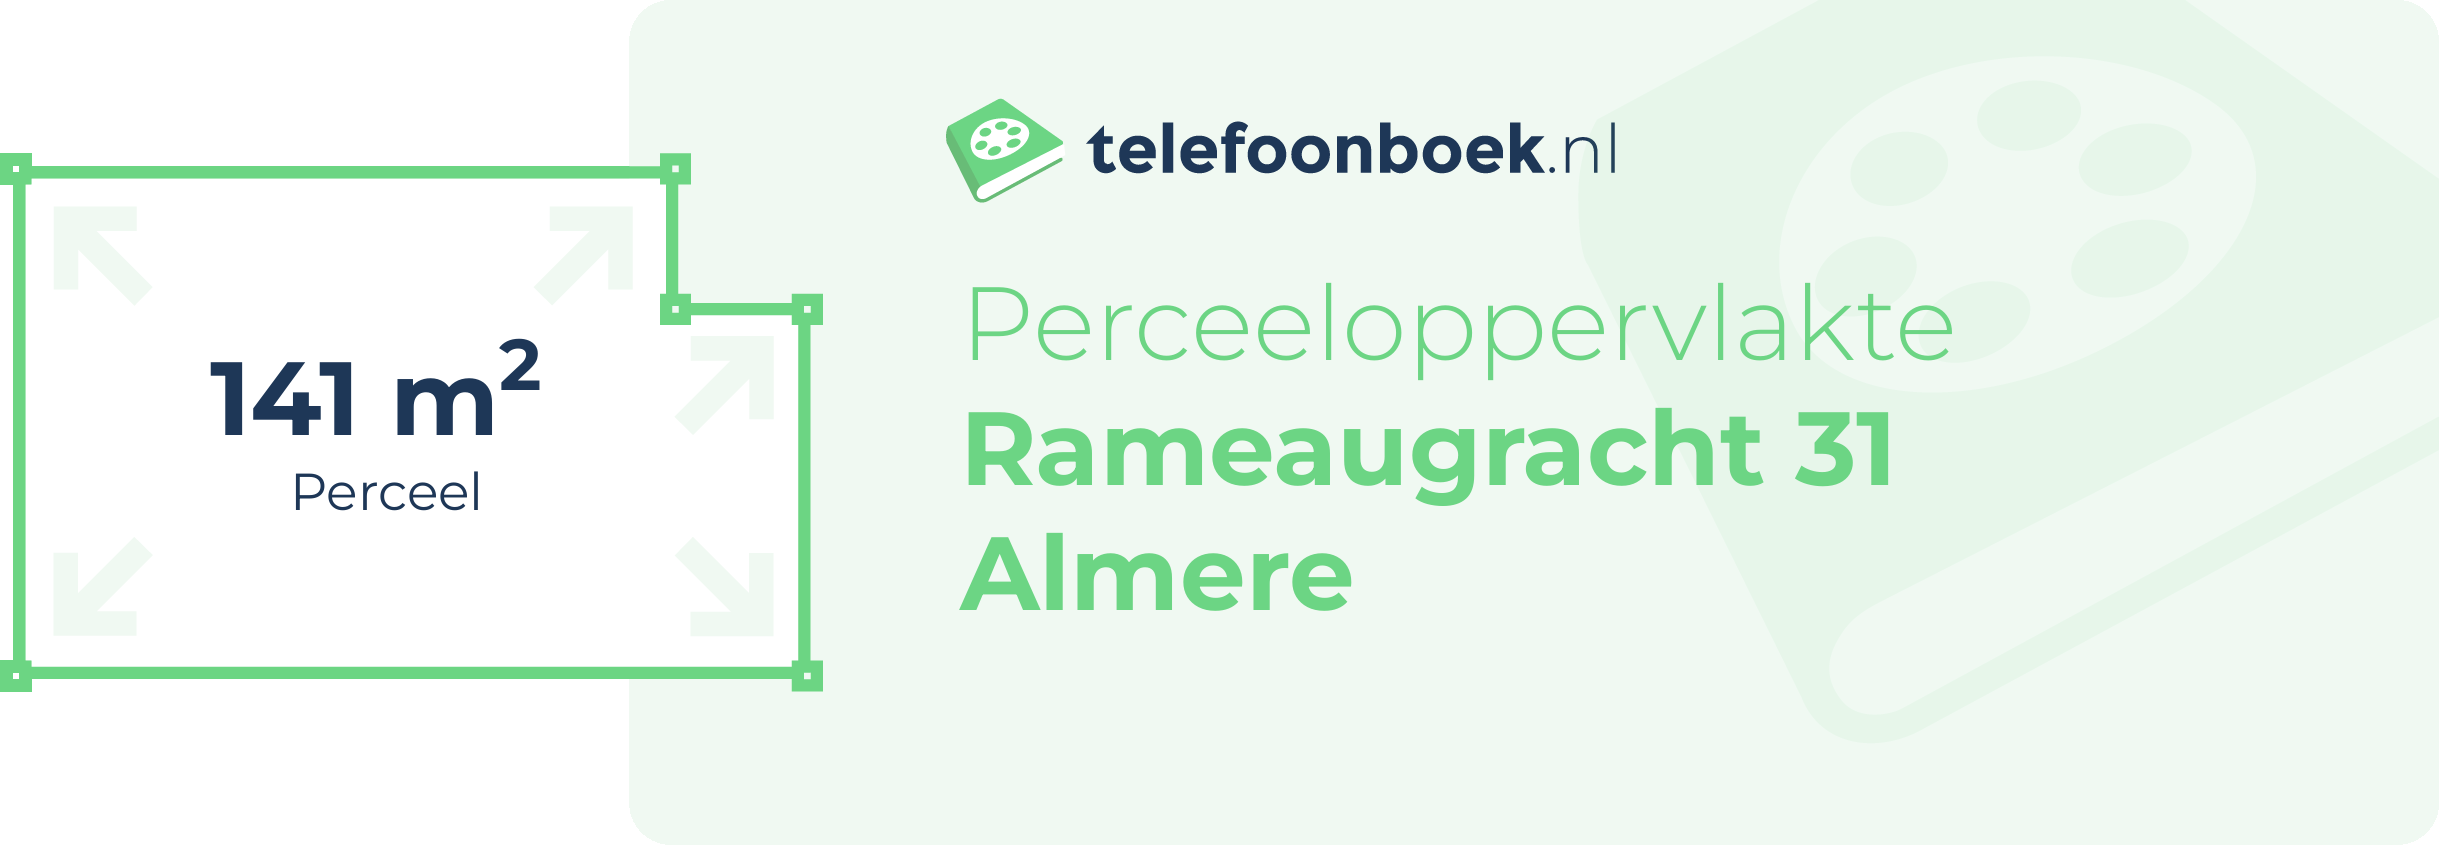 Perceeloppervlakte Rameaugracht 31 Almere